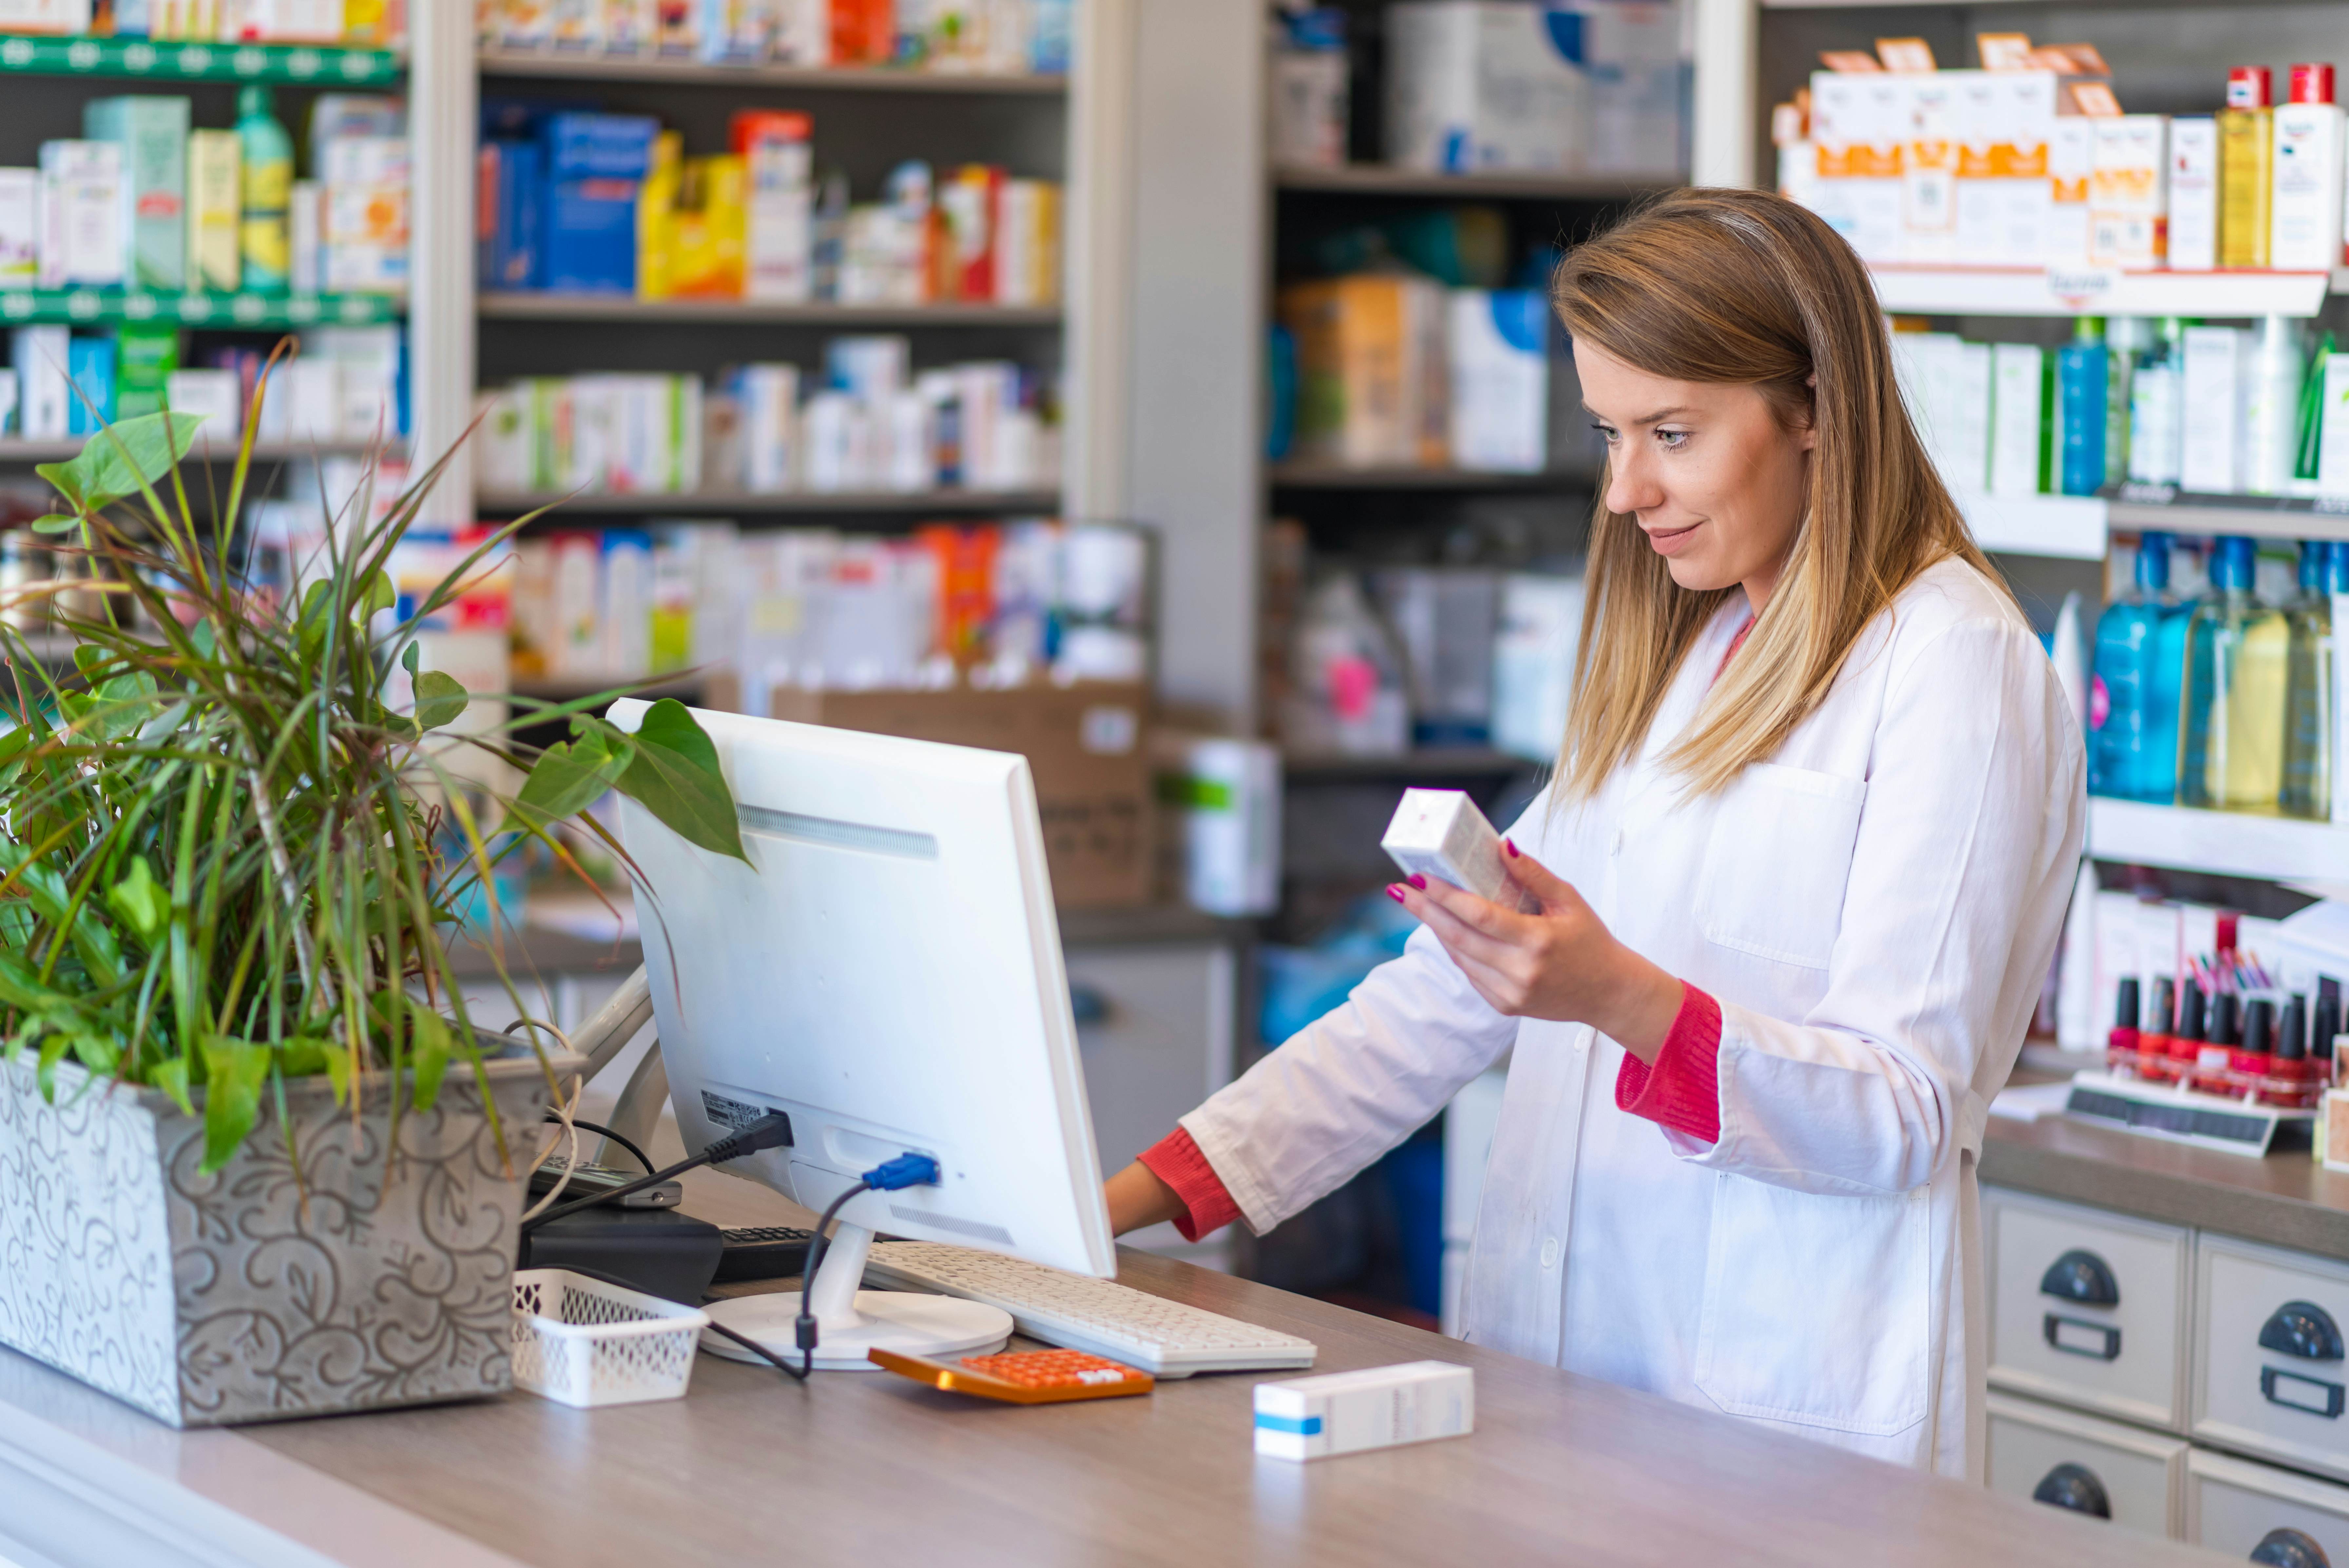 Female pharmacist working in a drug store or pharmacy